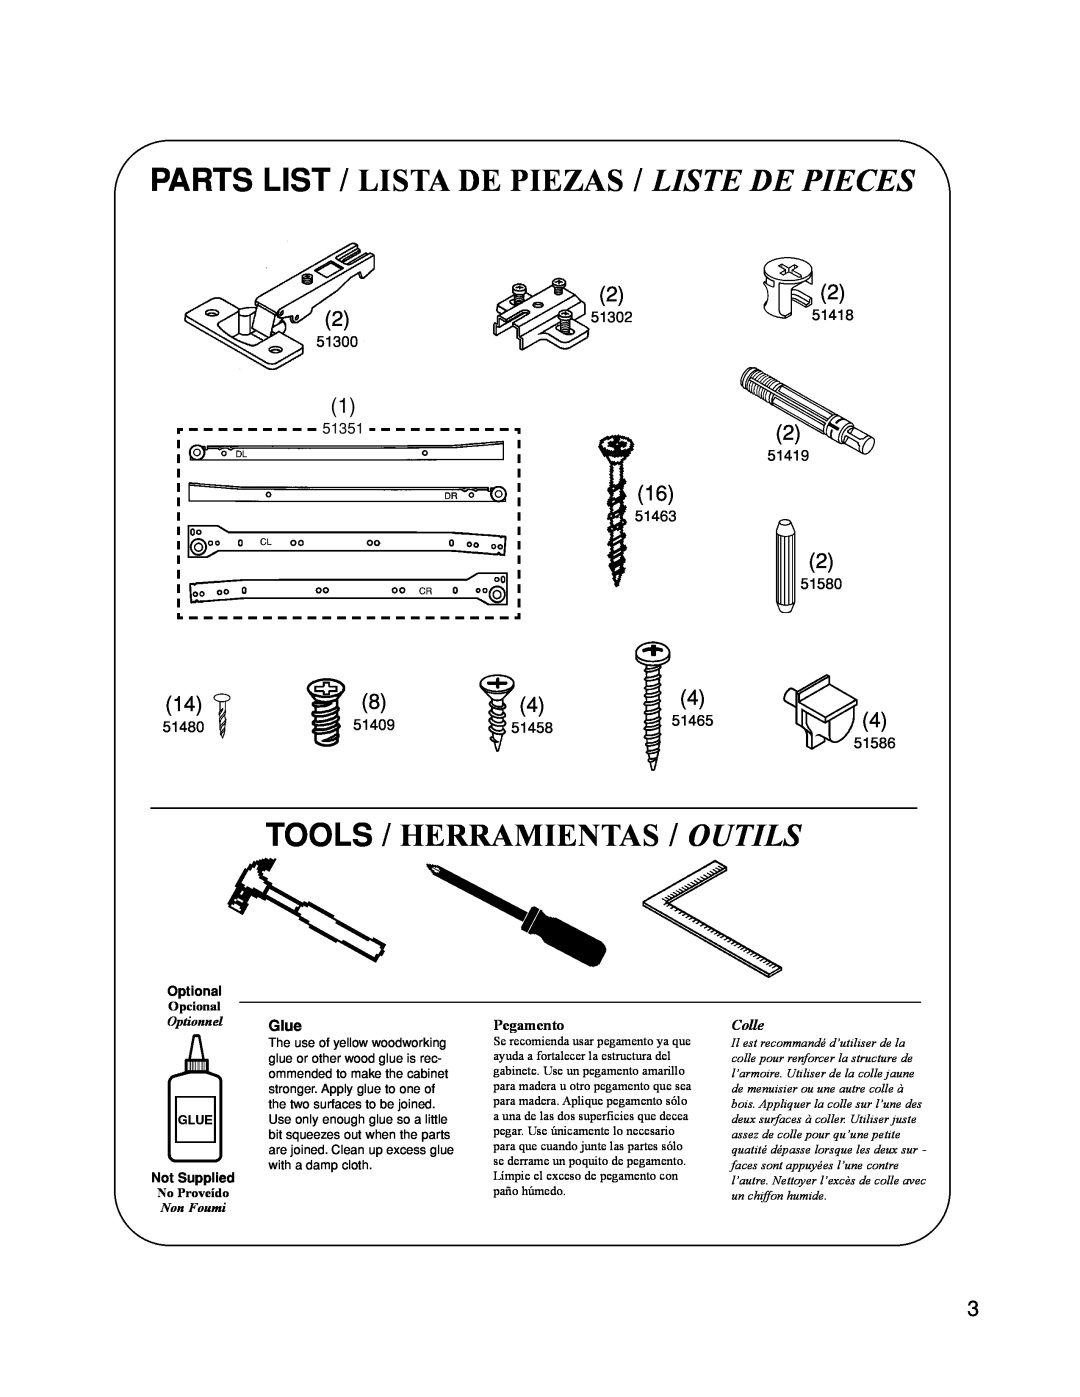 Closet Maid 12115 manual Tools / Herramientas / Outils, Parts List / Lista De Piezas / Liste De Pieces, Glue 